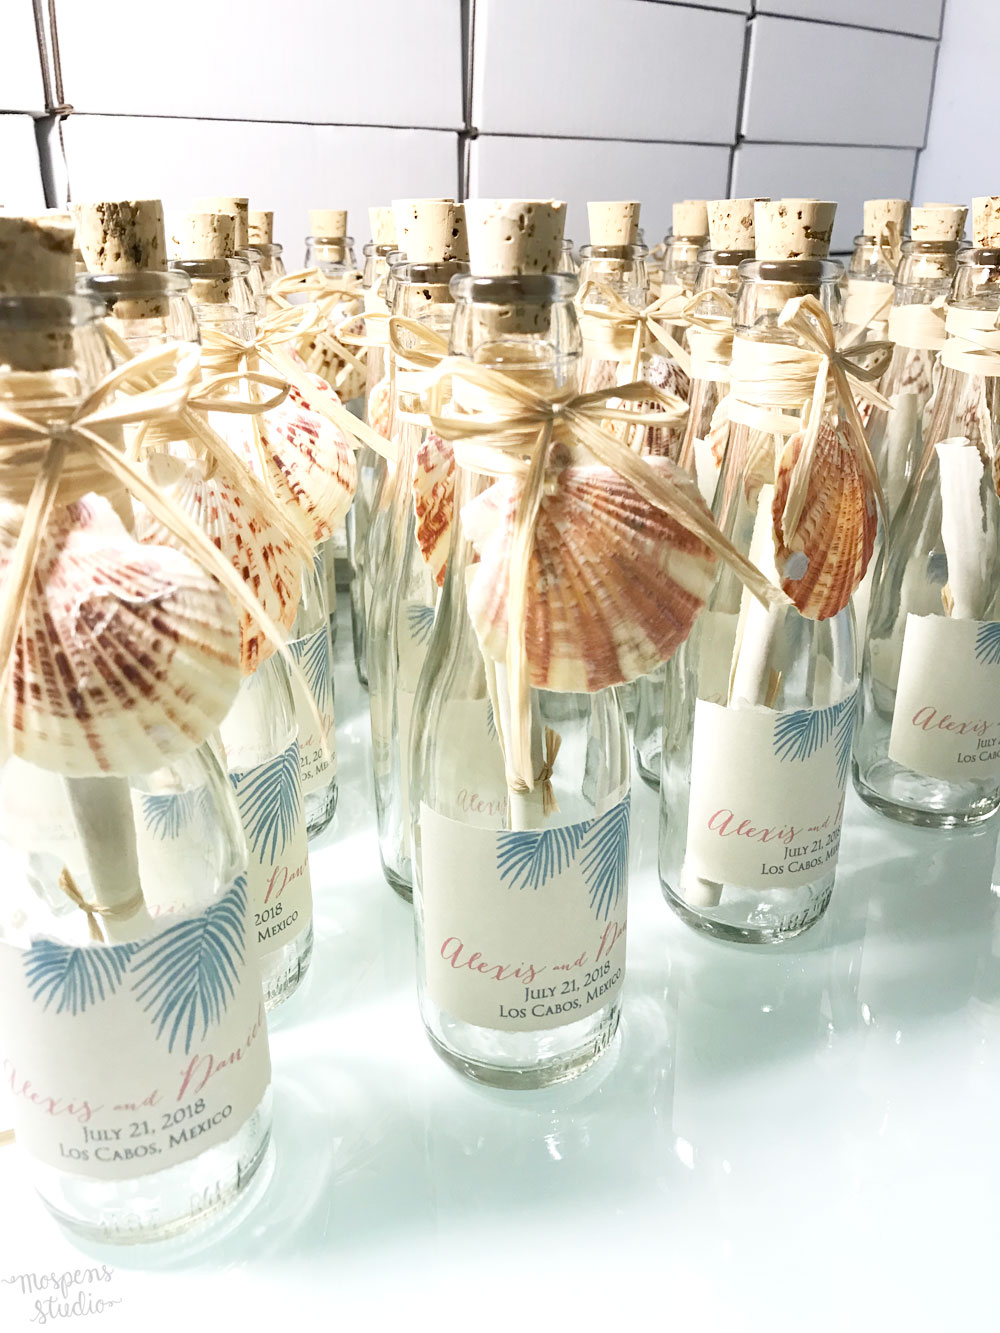 Beautiful beach wedding invitations in bottles by Mospens Studio.